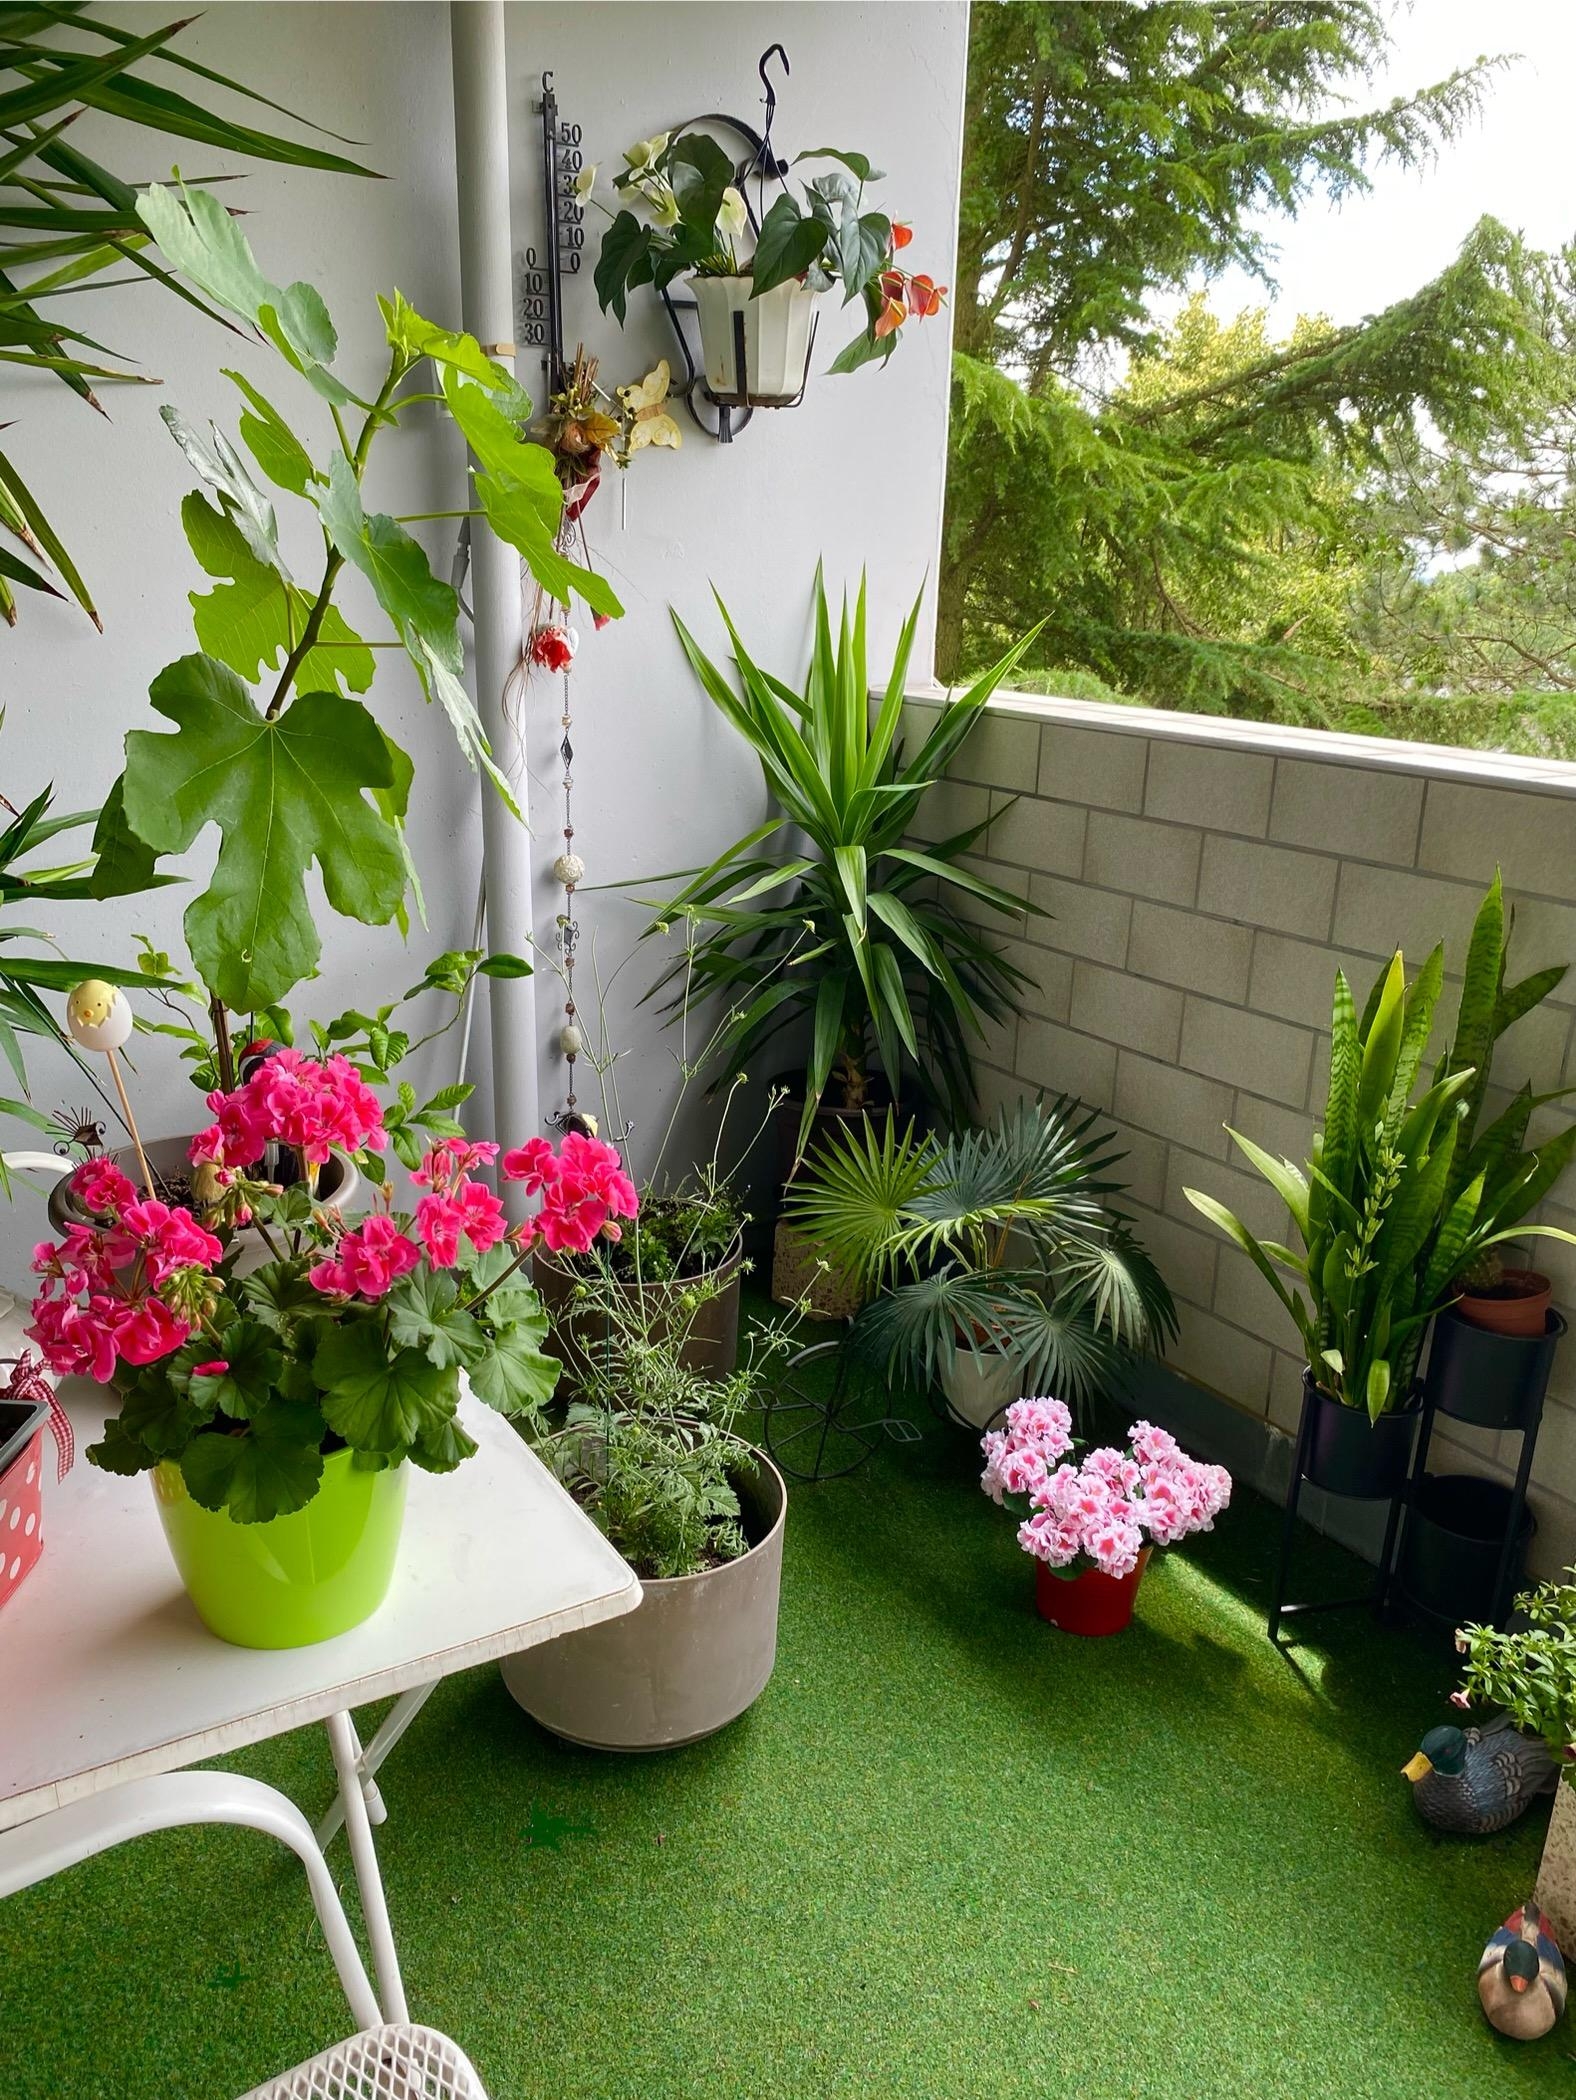 Pflanzenparkplatz im Sommer 🌞🪴👩‍🌾
#logia #balkon #pflanzen